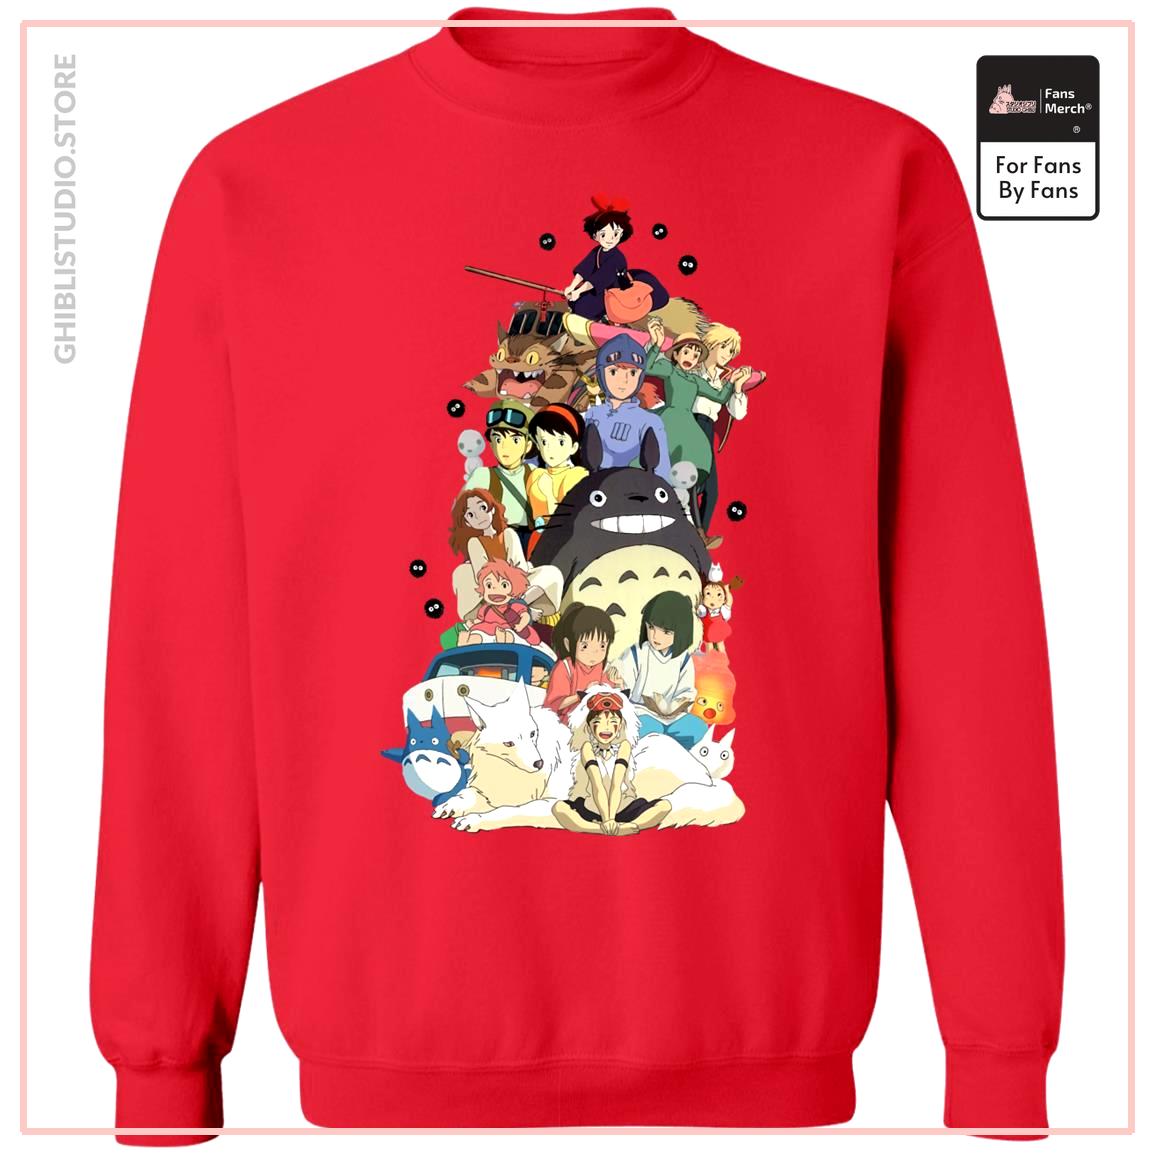 Spirited Away Animated Character Movie Sweatshirt - Ghibli Merch Store -  Official Studio Ghibli Merchandise